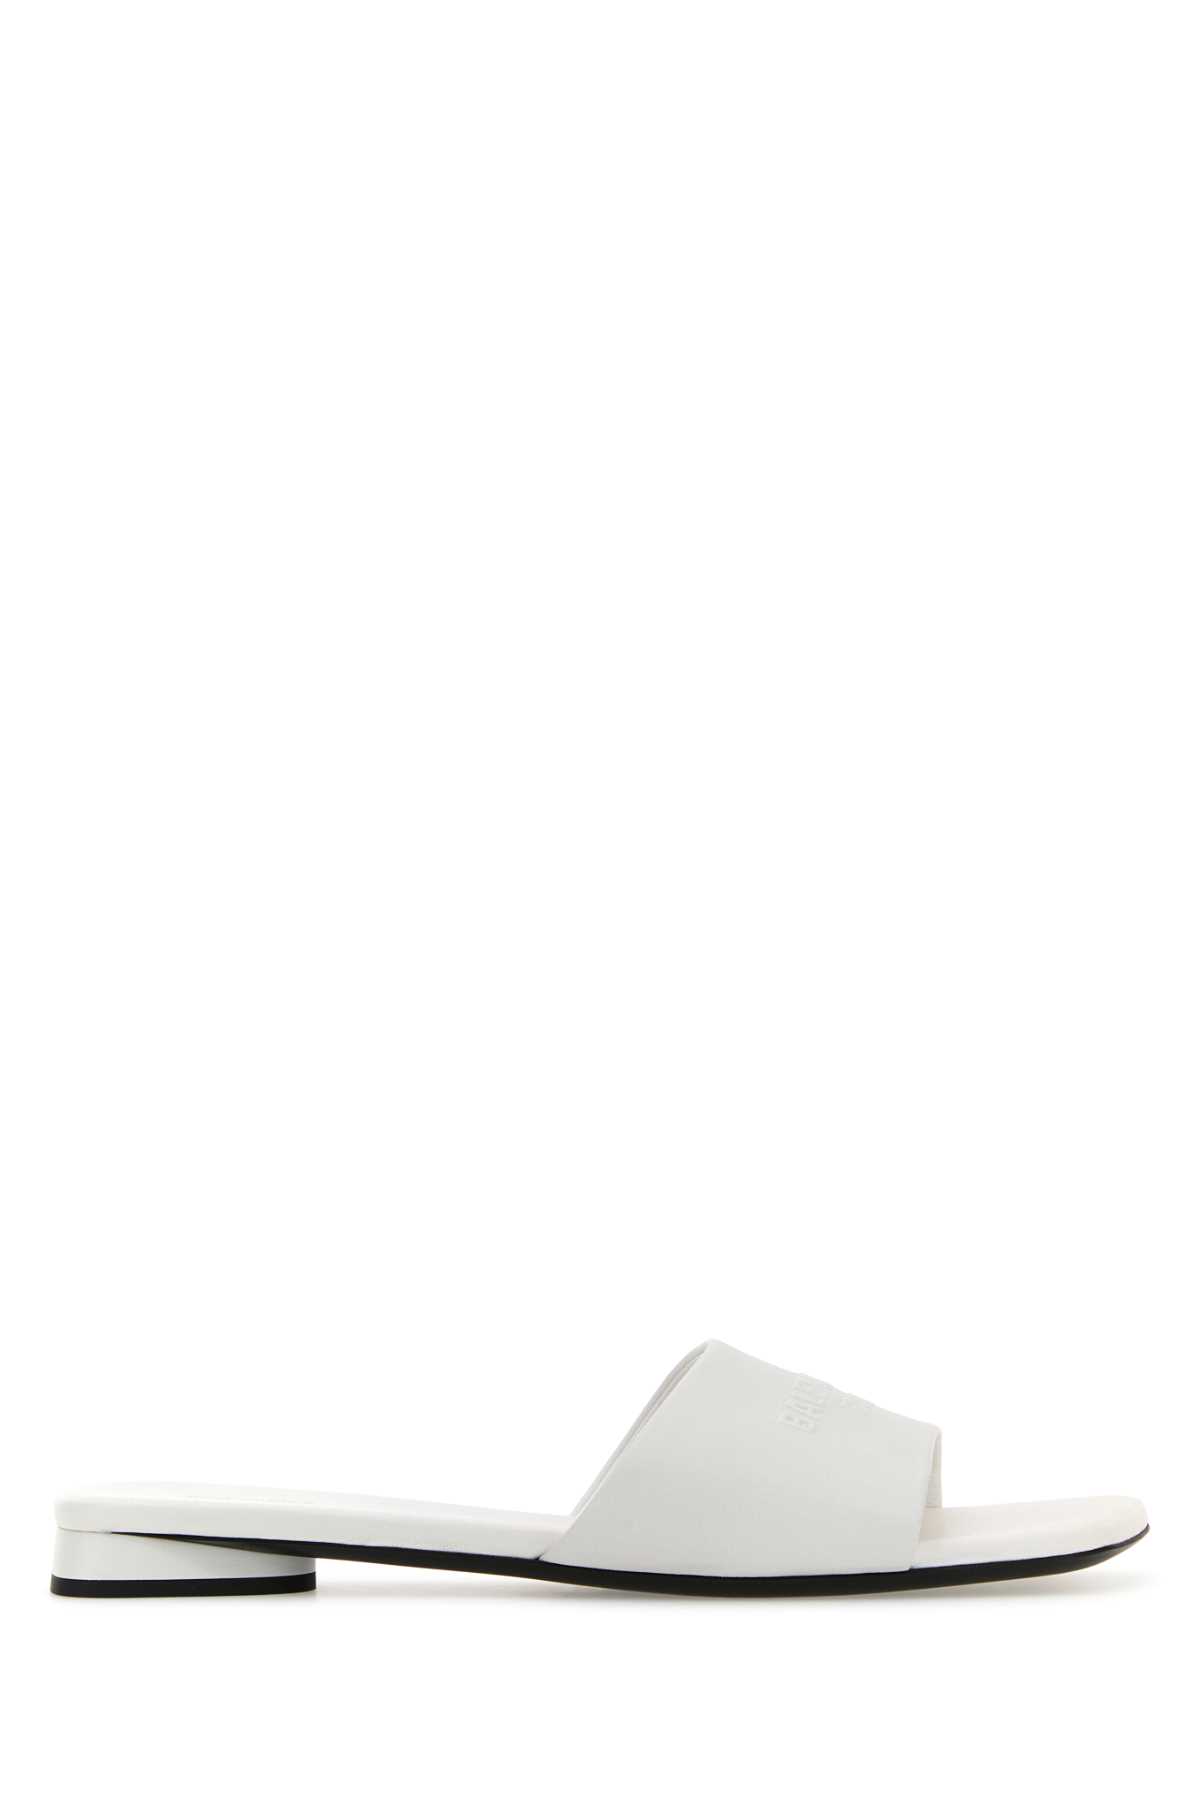 Shop Balenciaga White Leather Duty Free Slippers